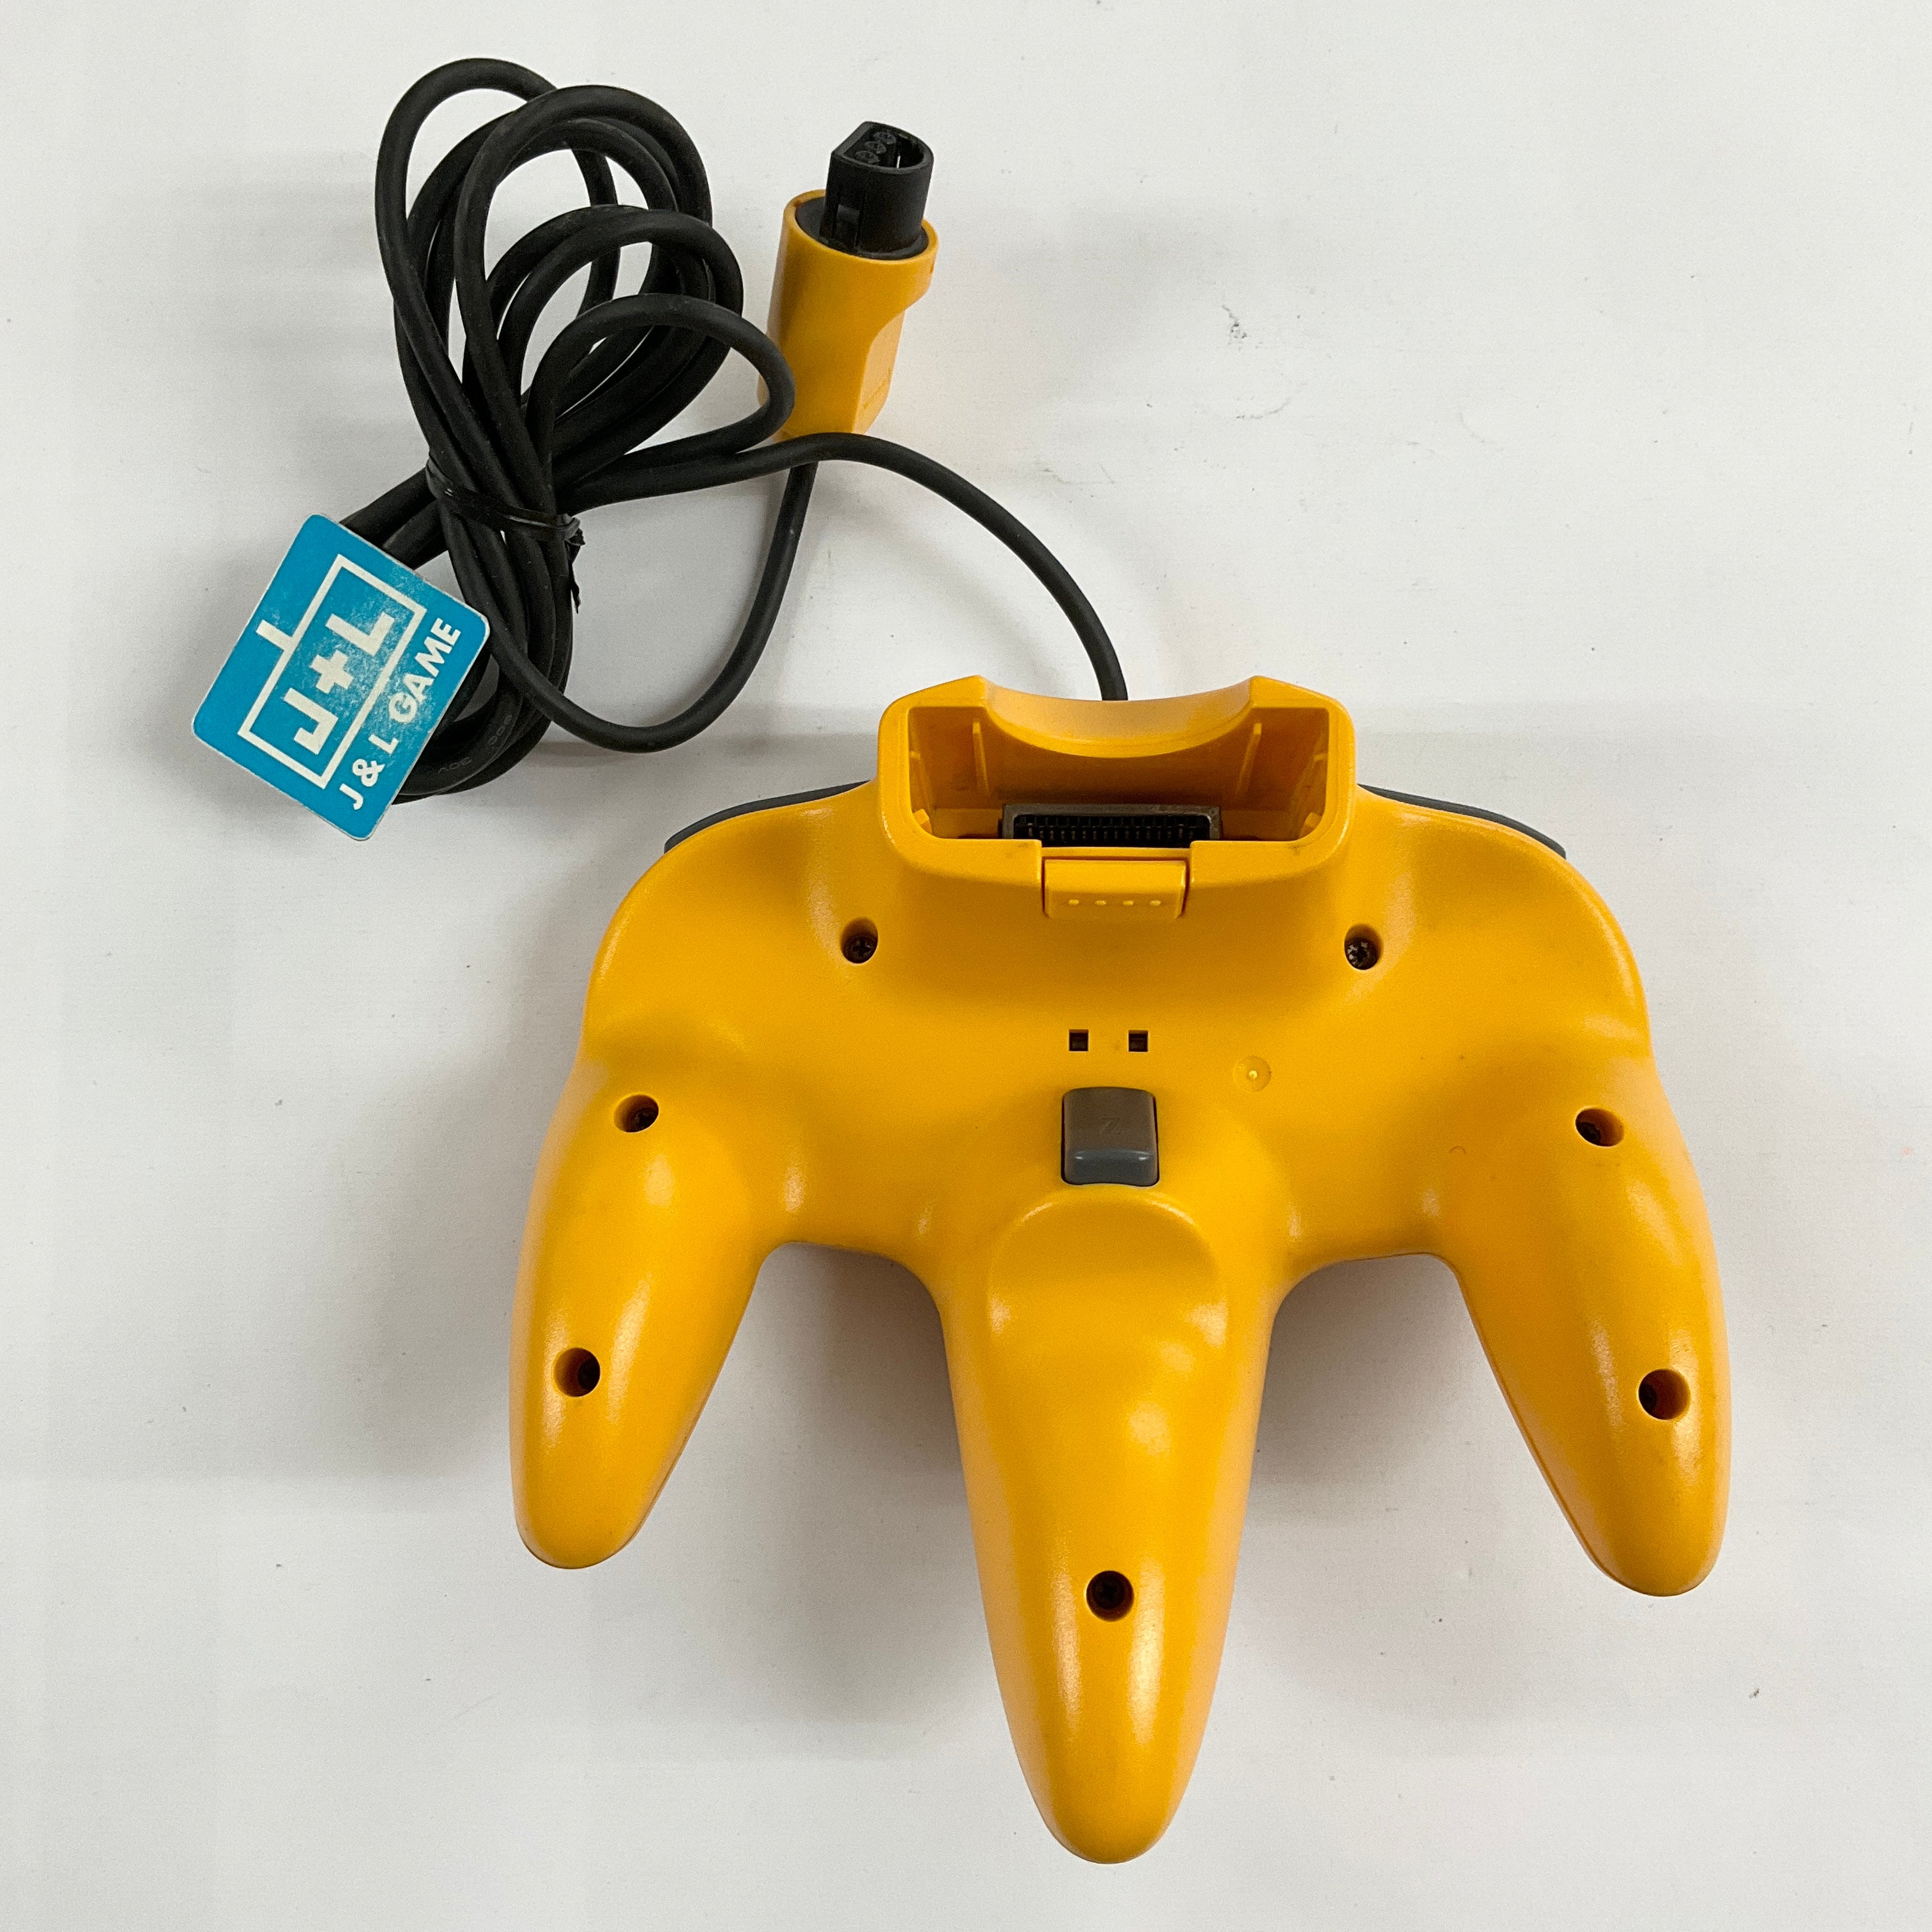 Nintendo 64 Controller (Yellow) - (N64) Nintendo 64 [Pre-Owned] (Japanese Import) Accessories Nintendo   